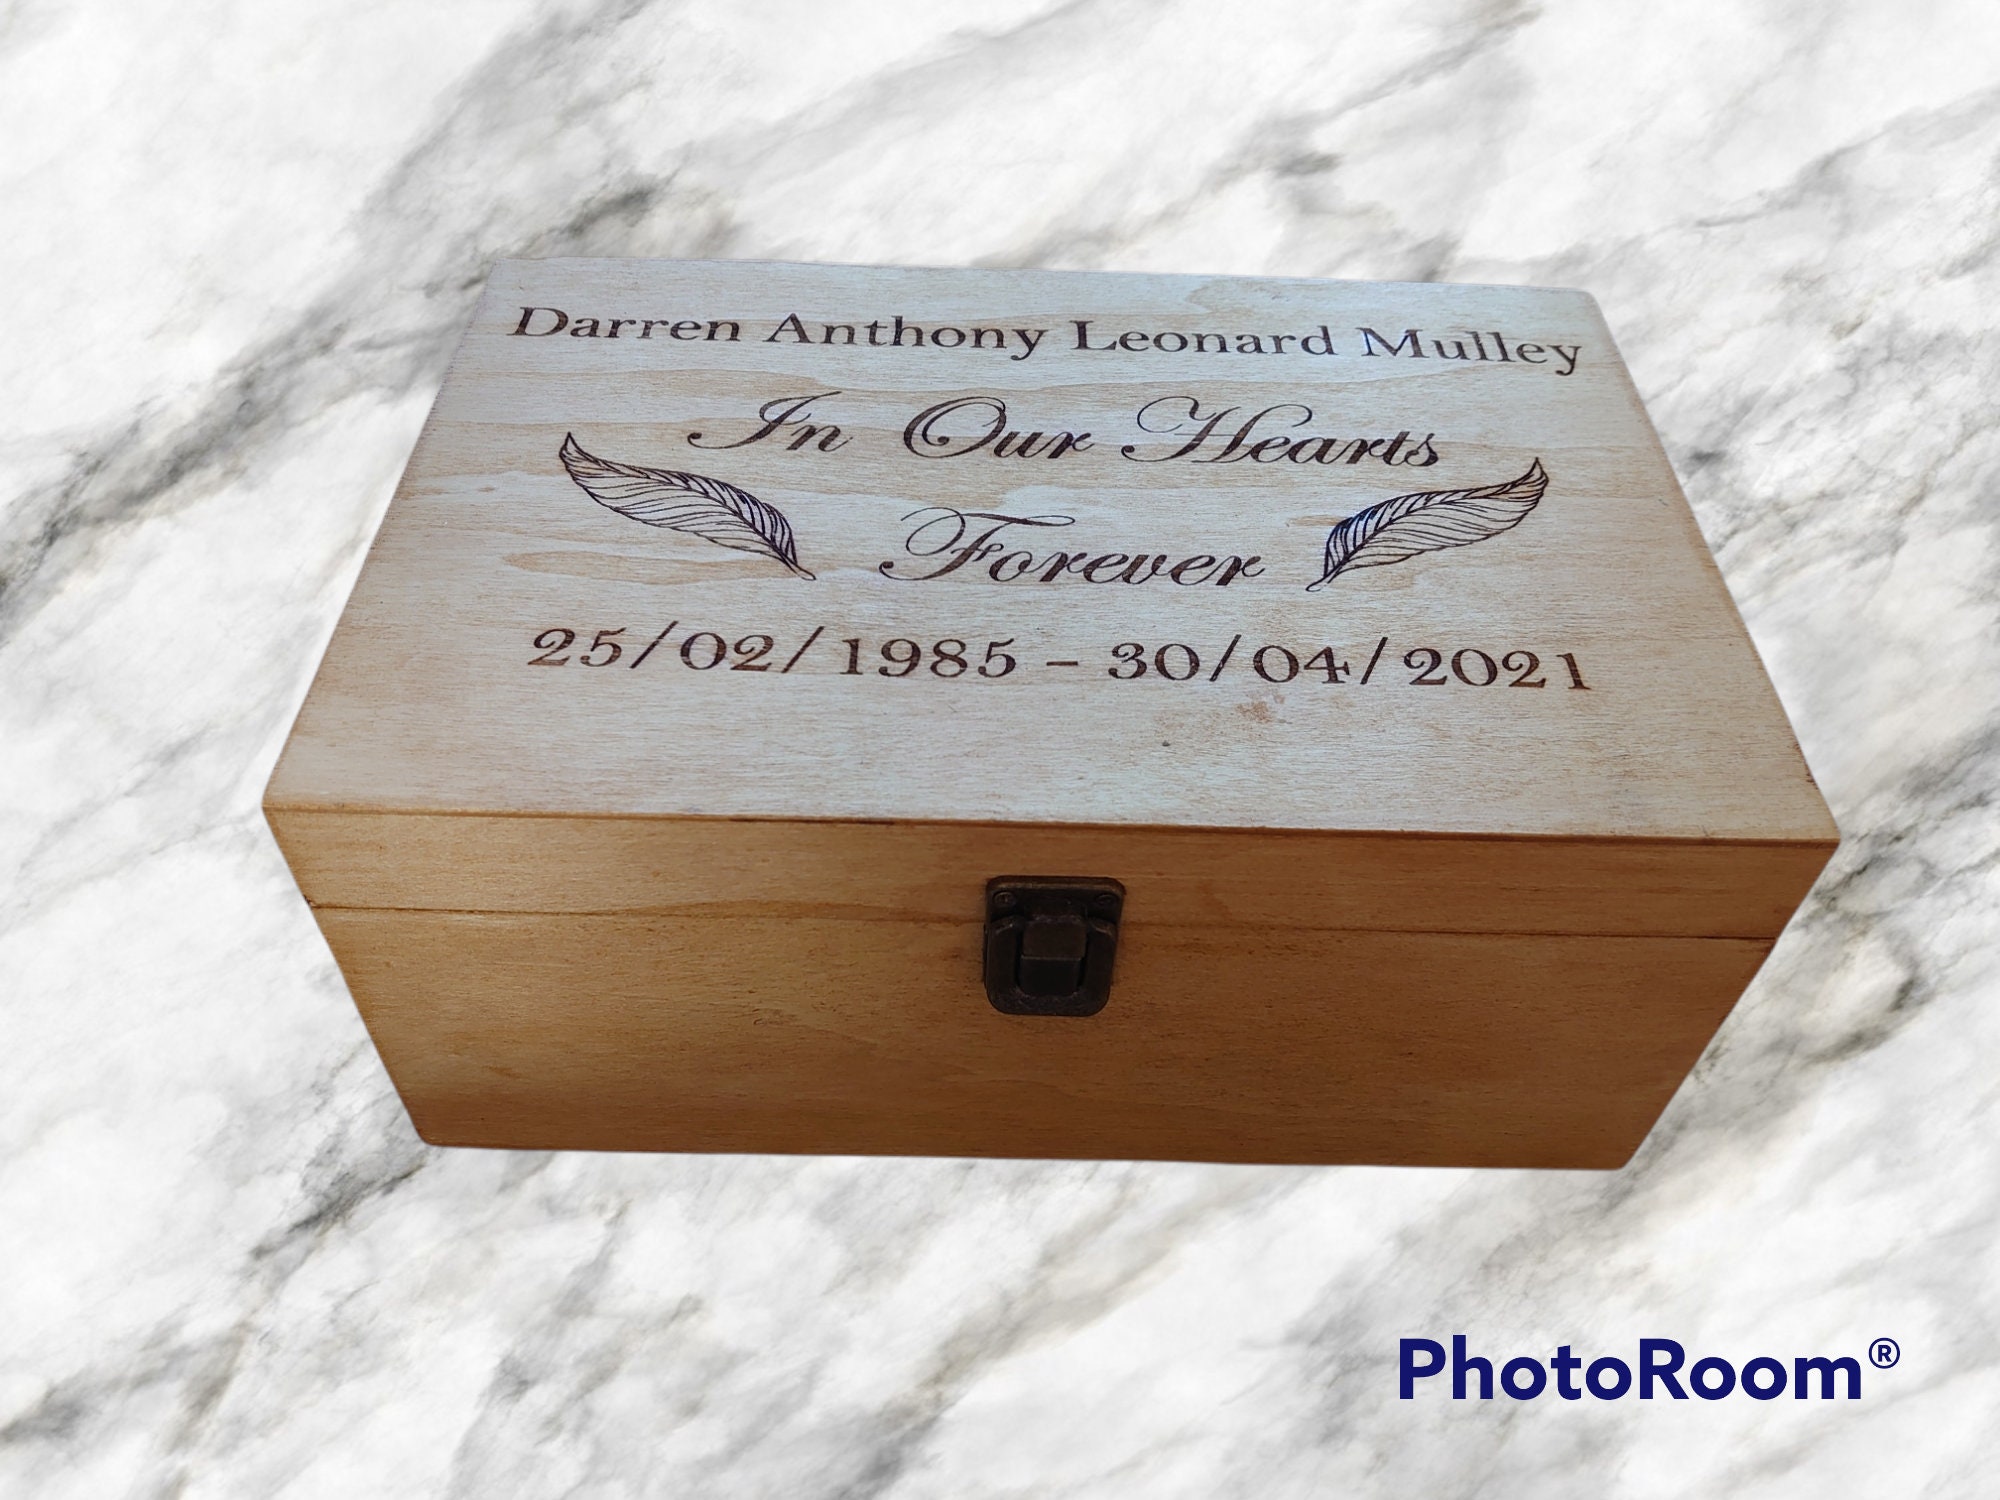 Personalised Treasured Memories Photo Gift Box, Remembrance Gift